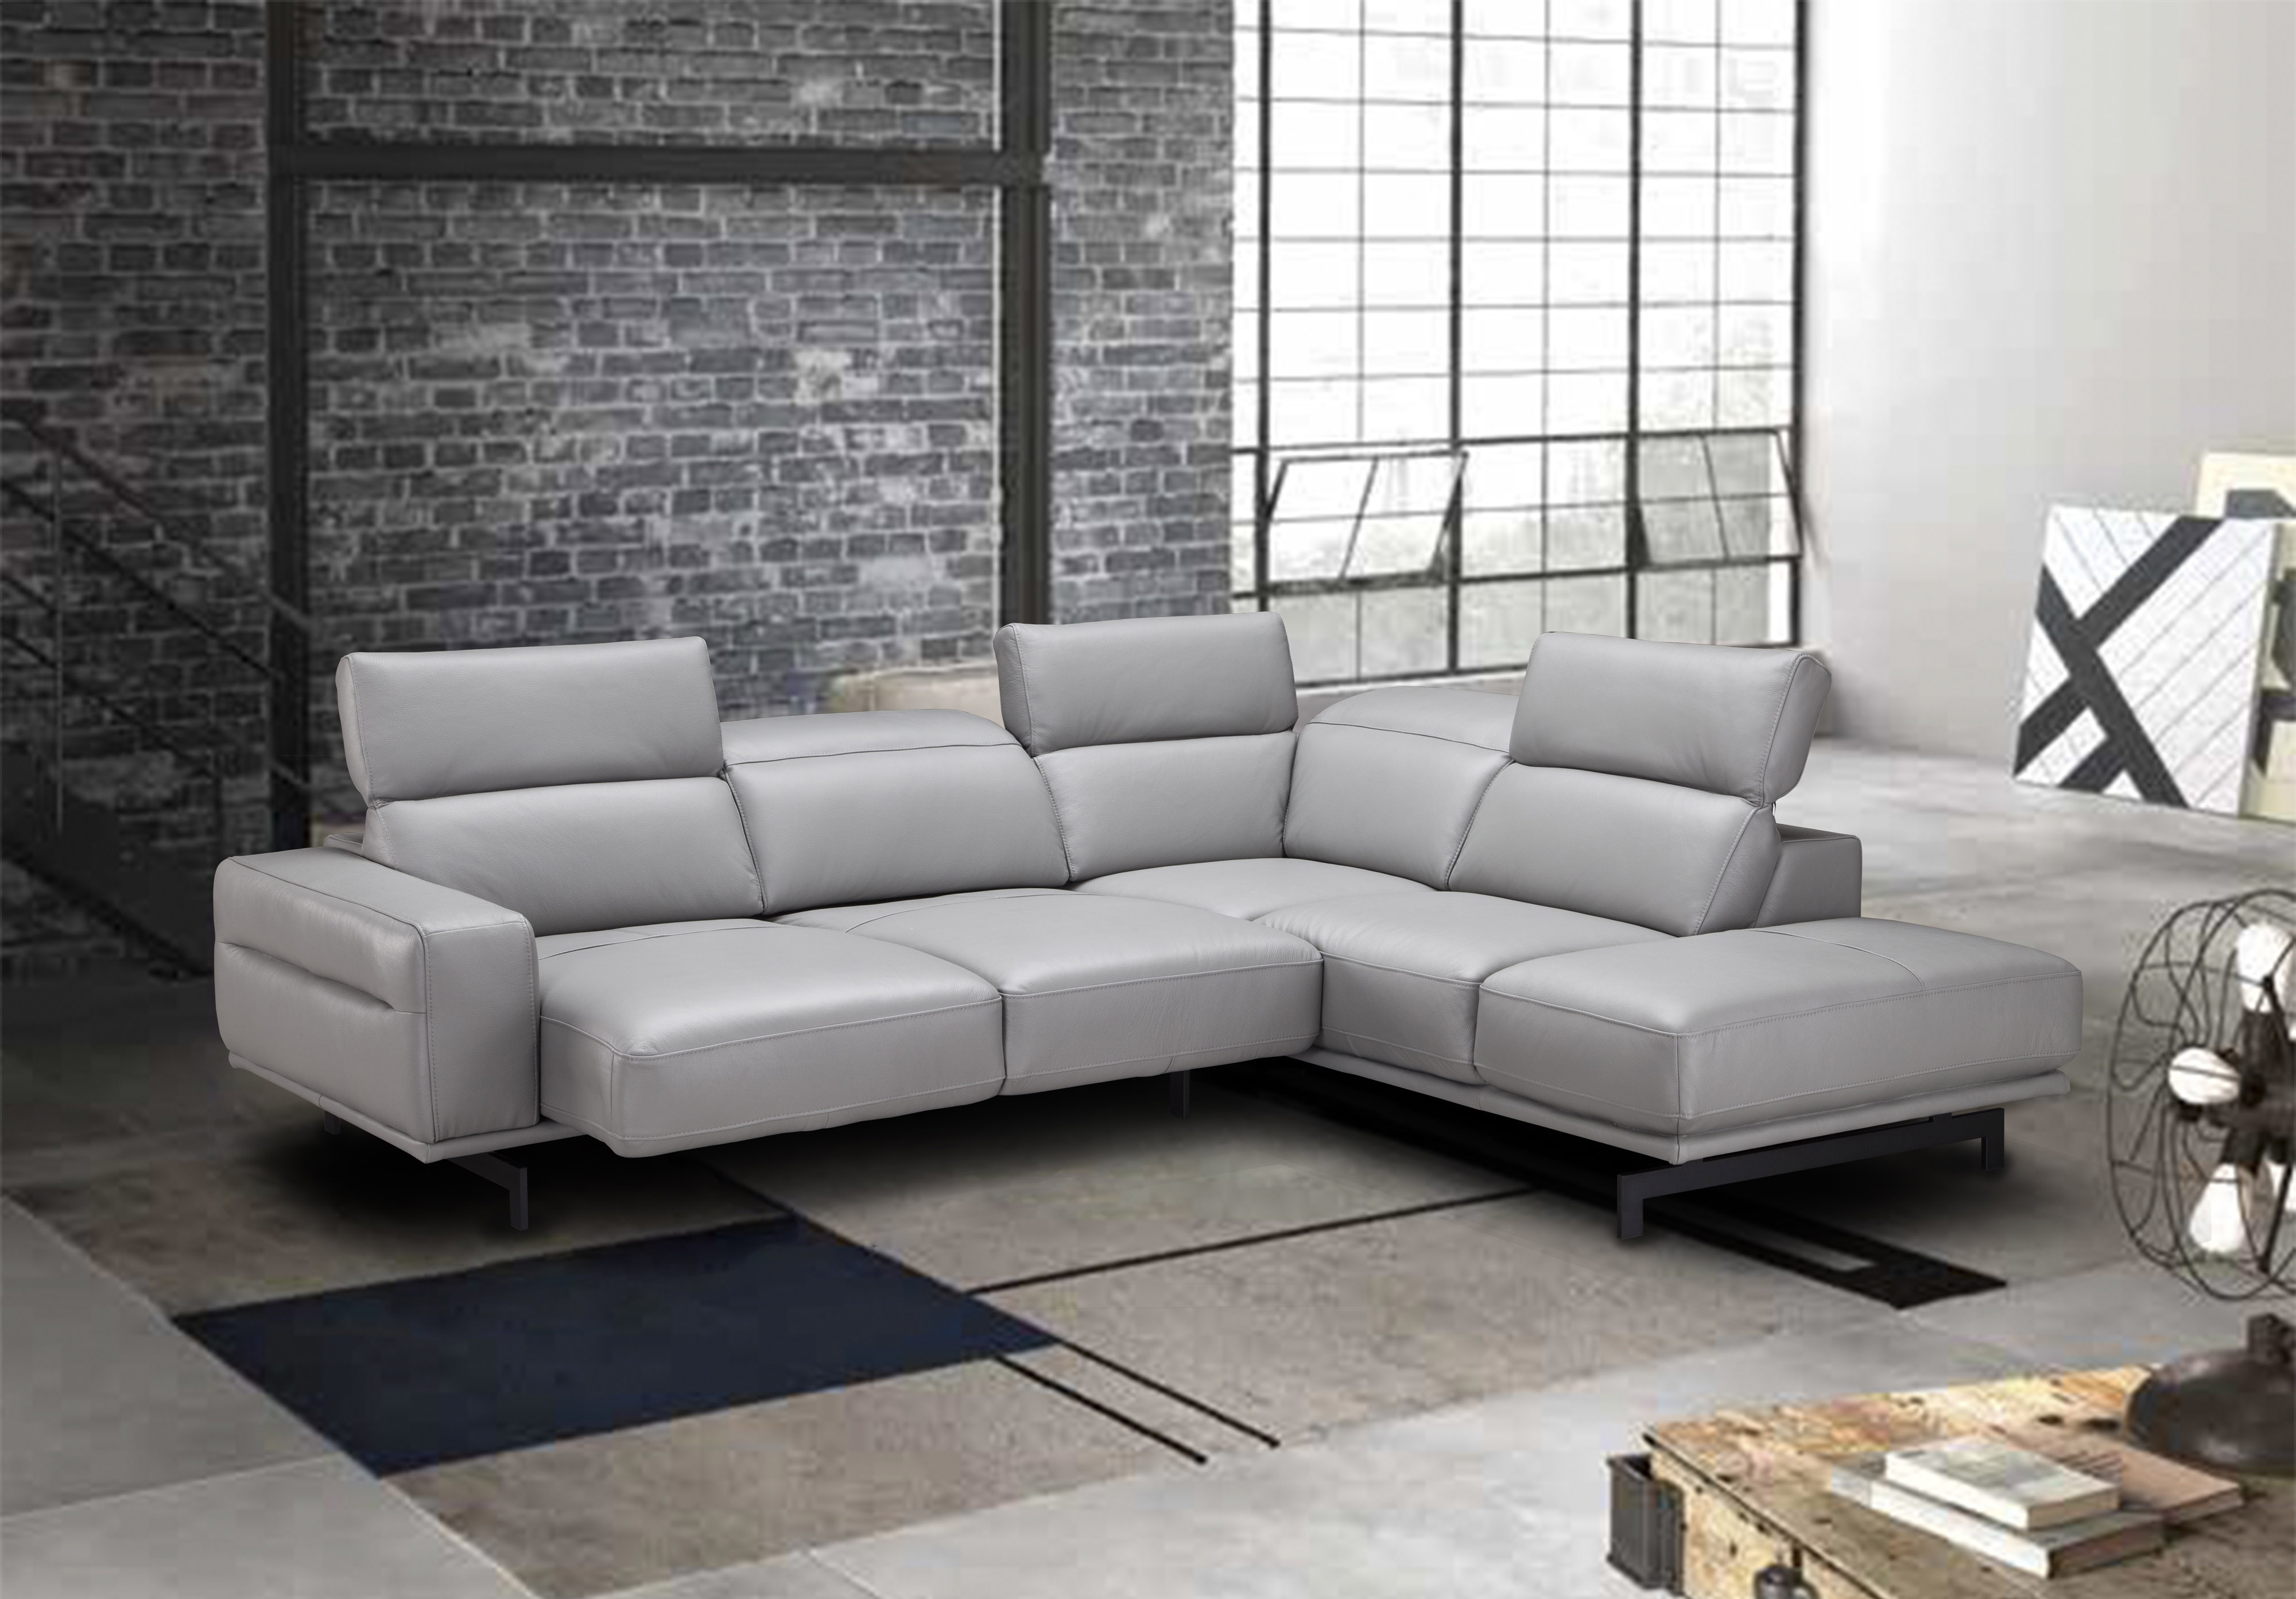 paulina grey italian leather sectional sofa